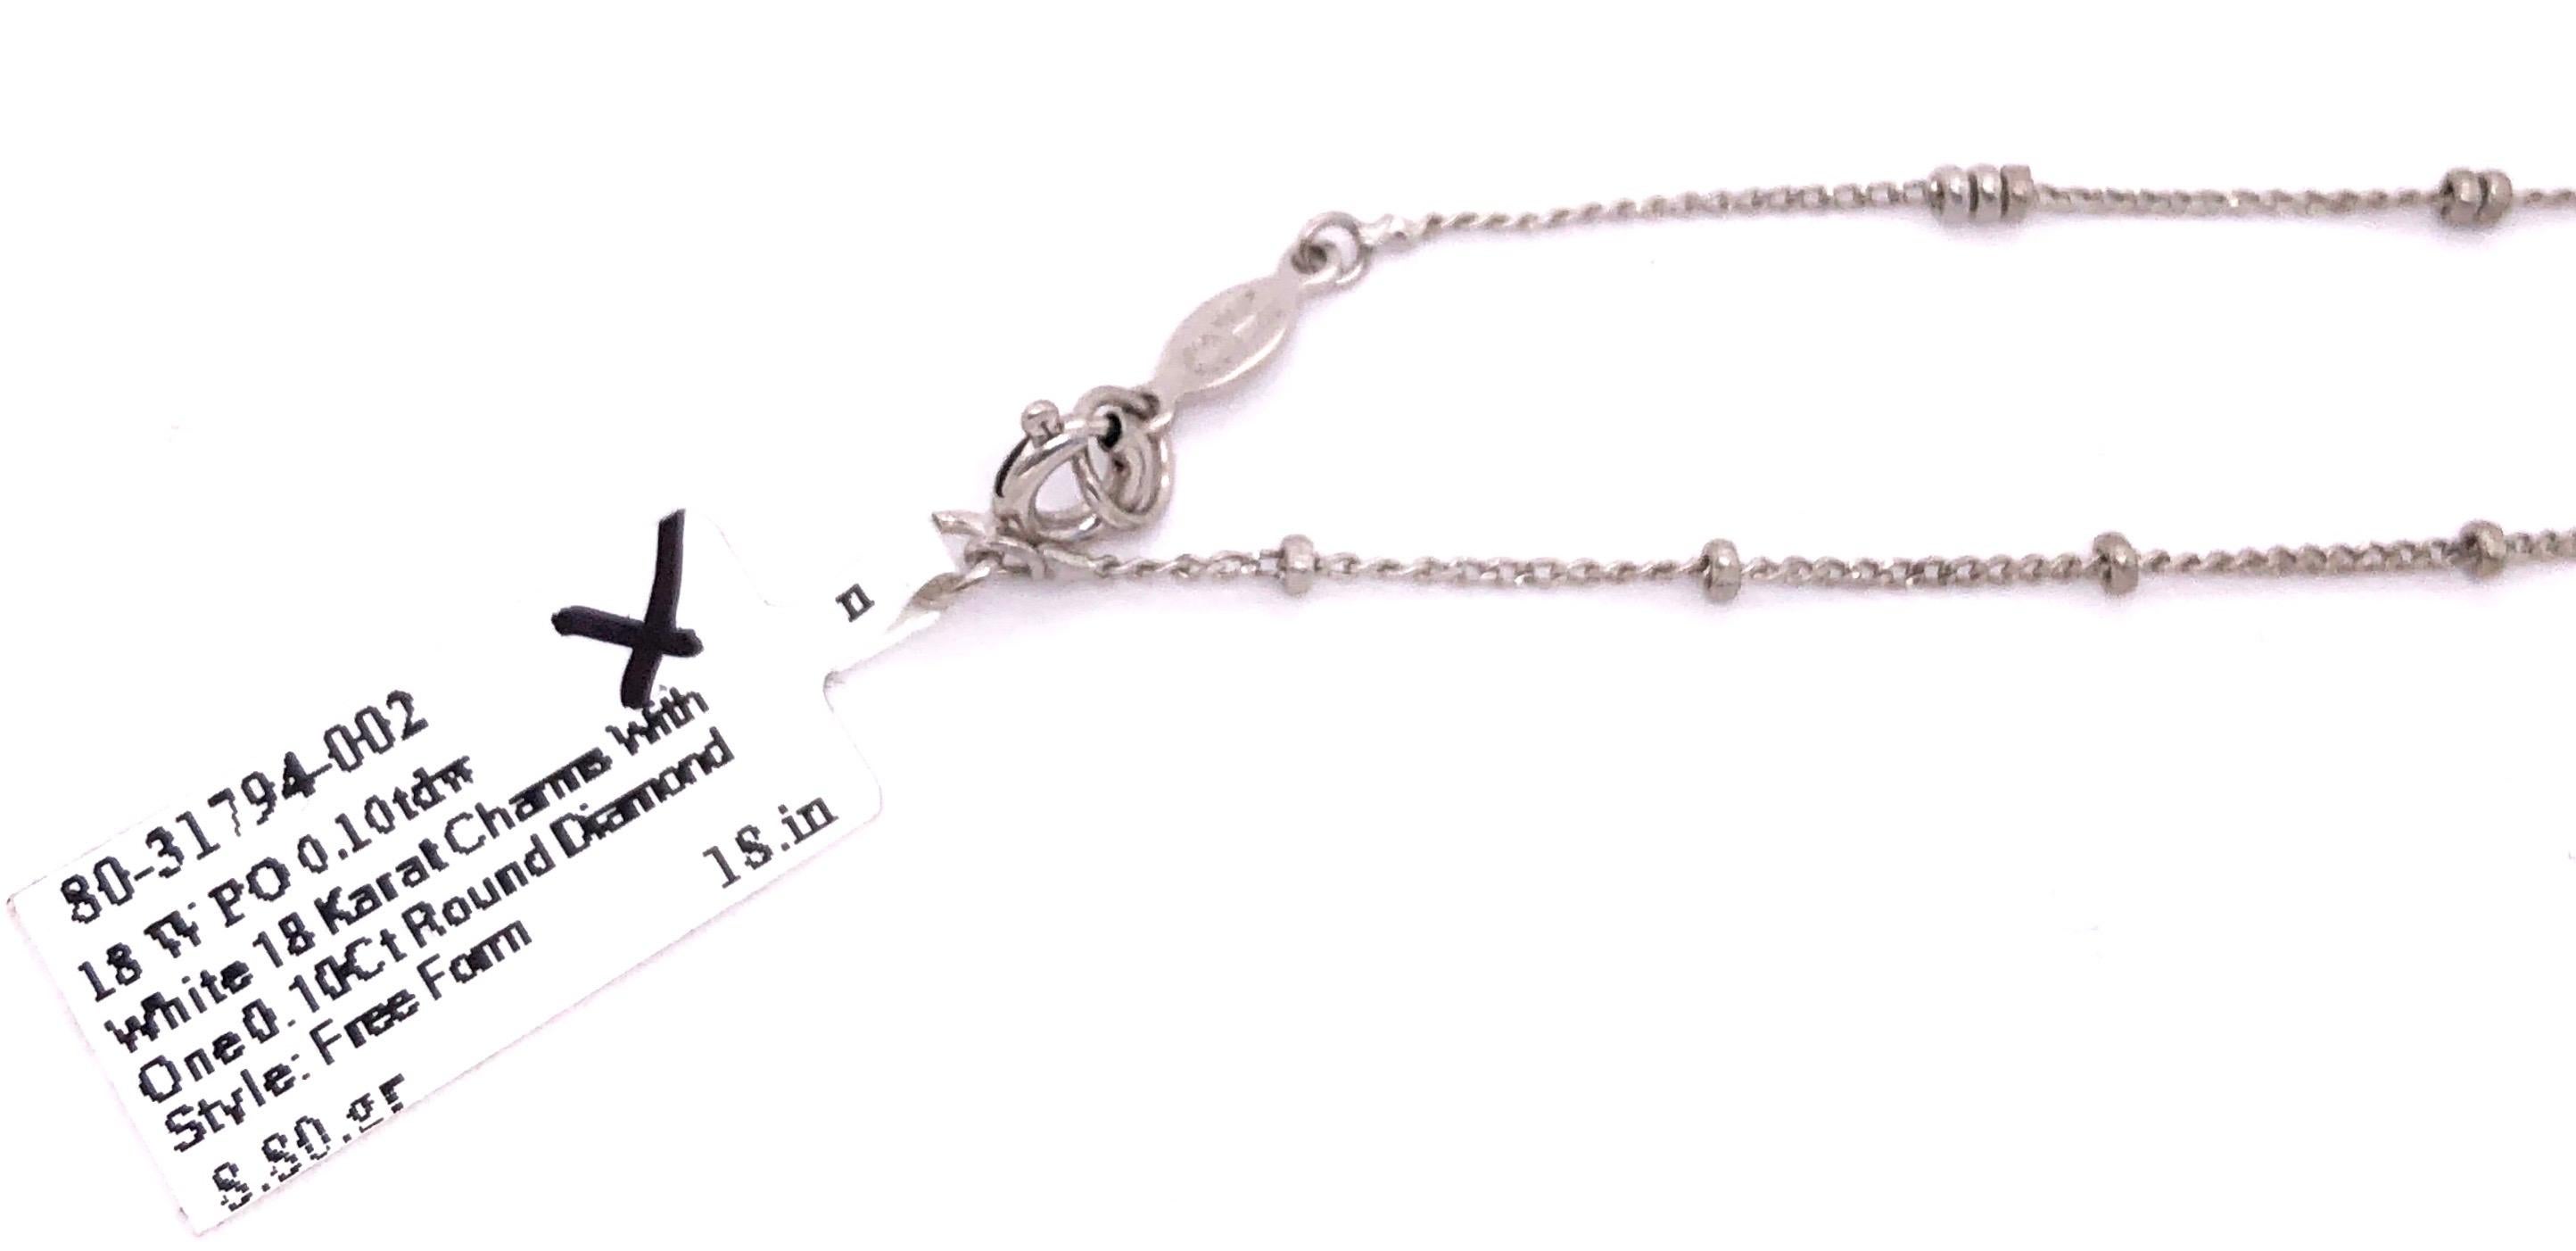 18 Karat White Gold Necklace with Pendant Charm 0.10 Carat Round Diamond For Sale 1